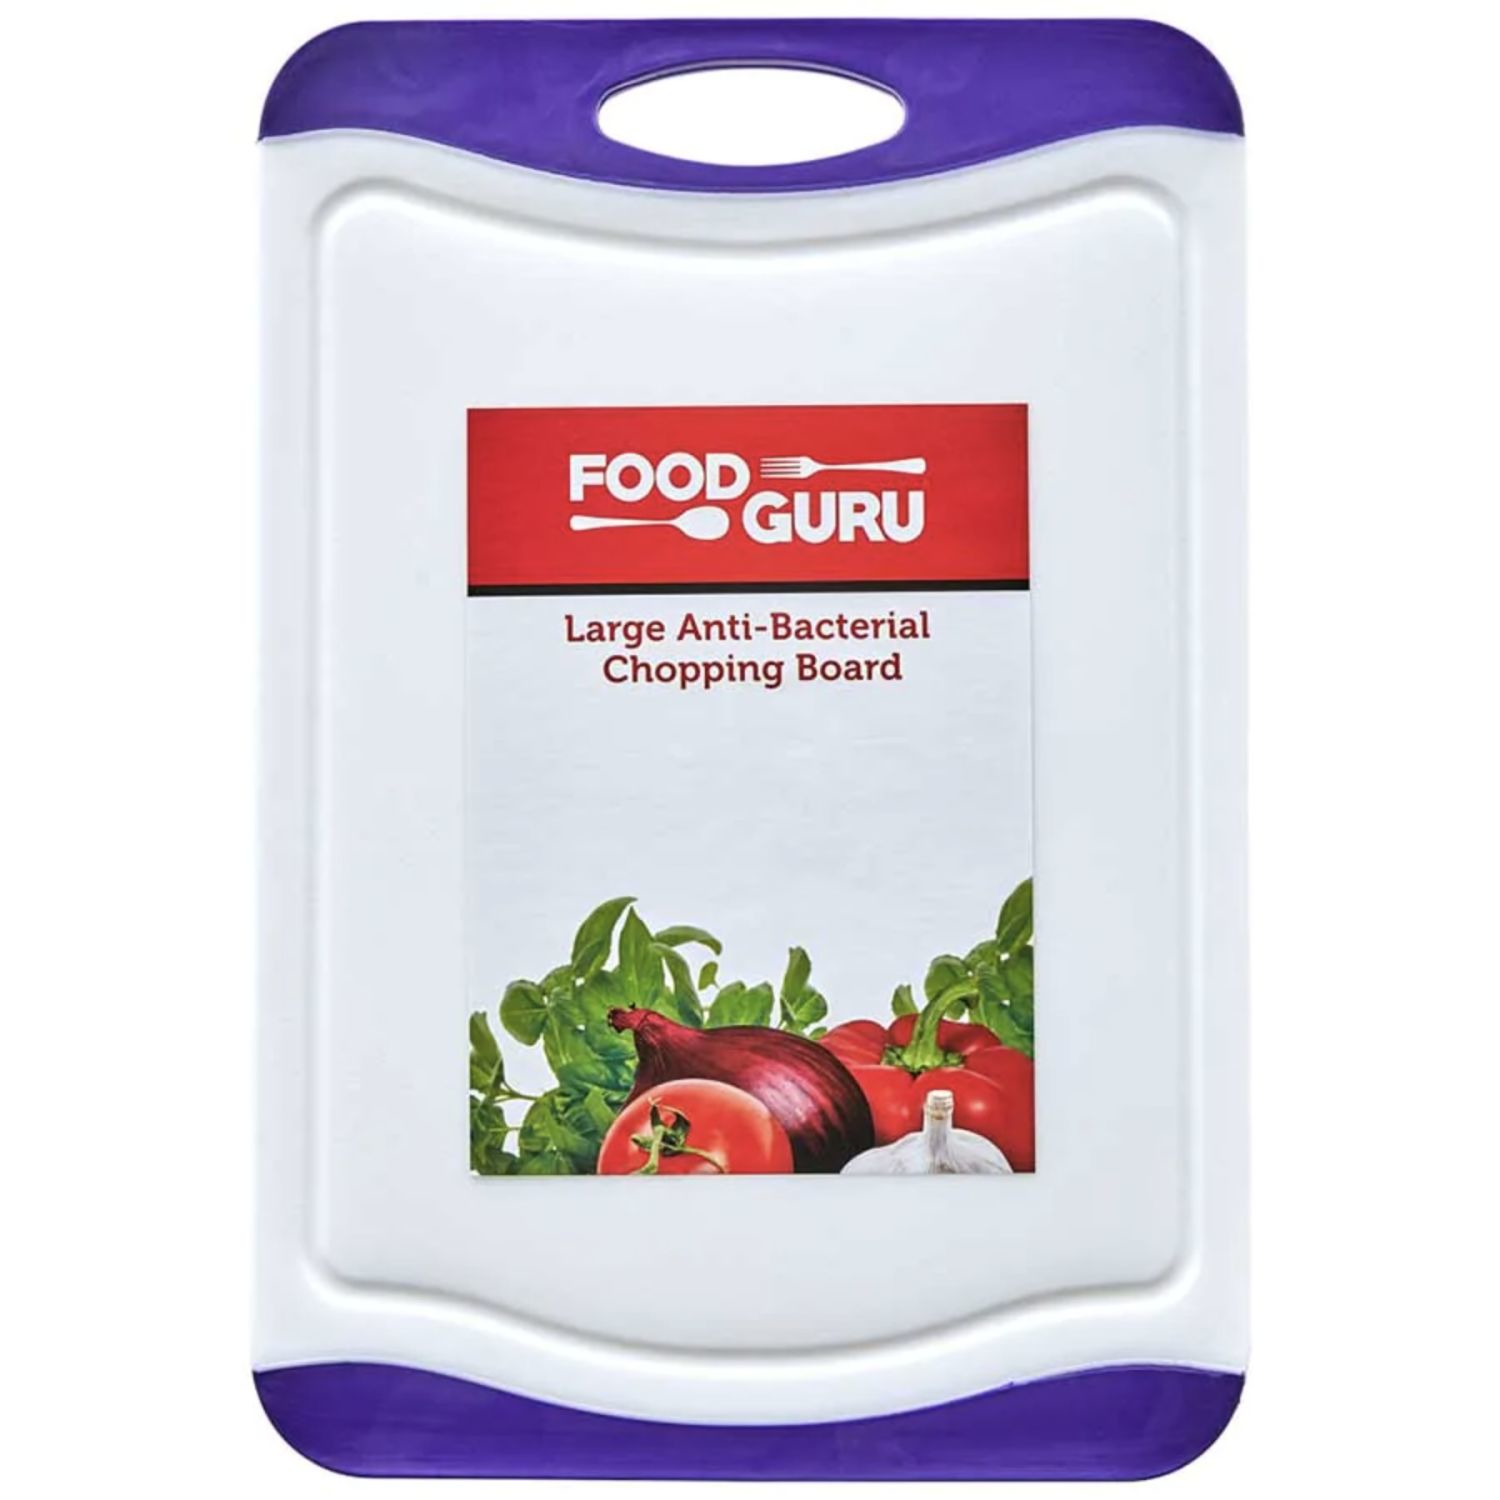 Food Guru Anti-Bacterial Chopping Board Large, 1 Each